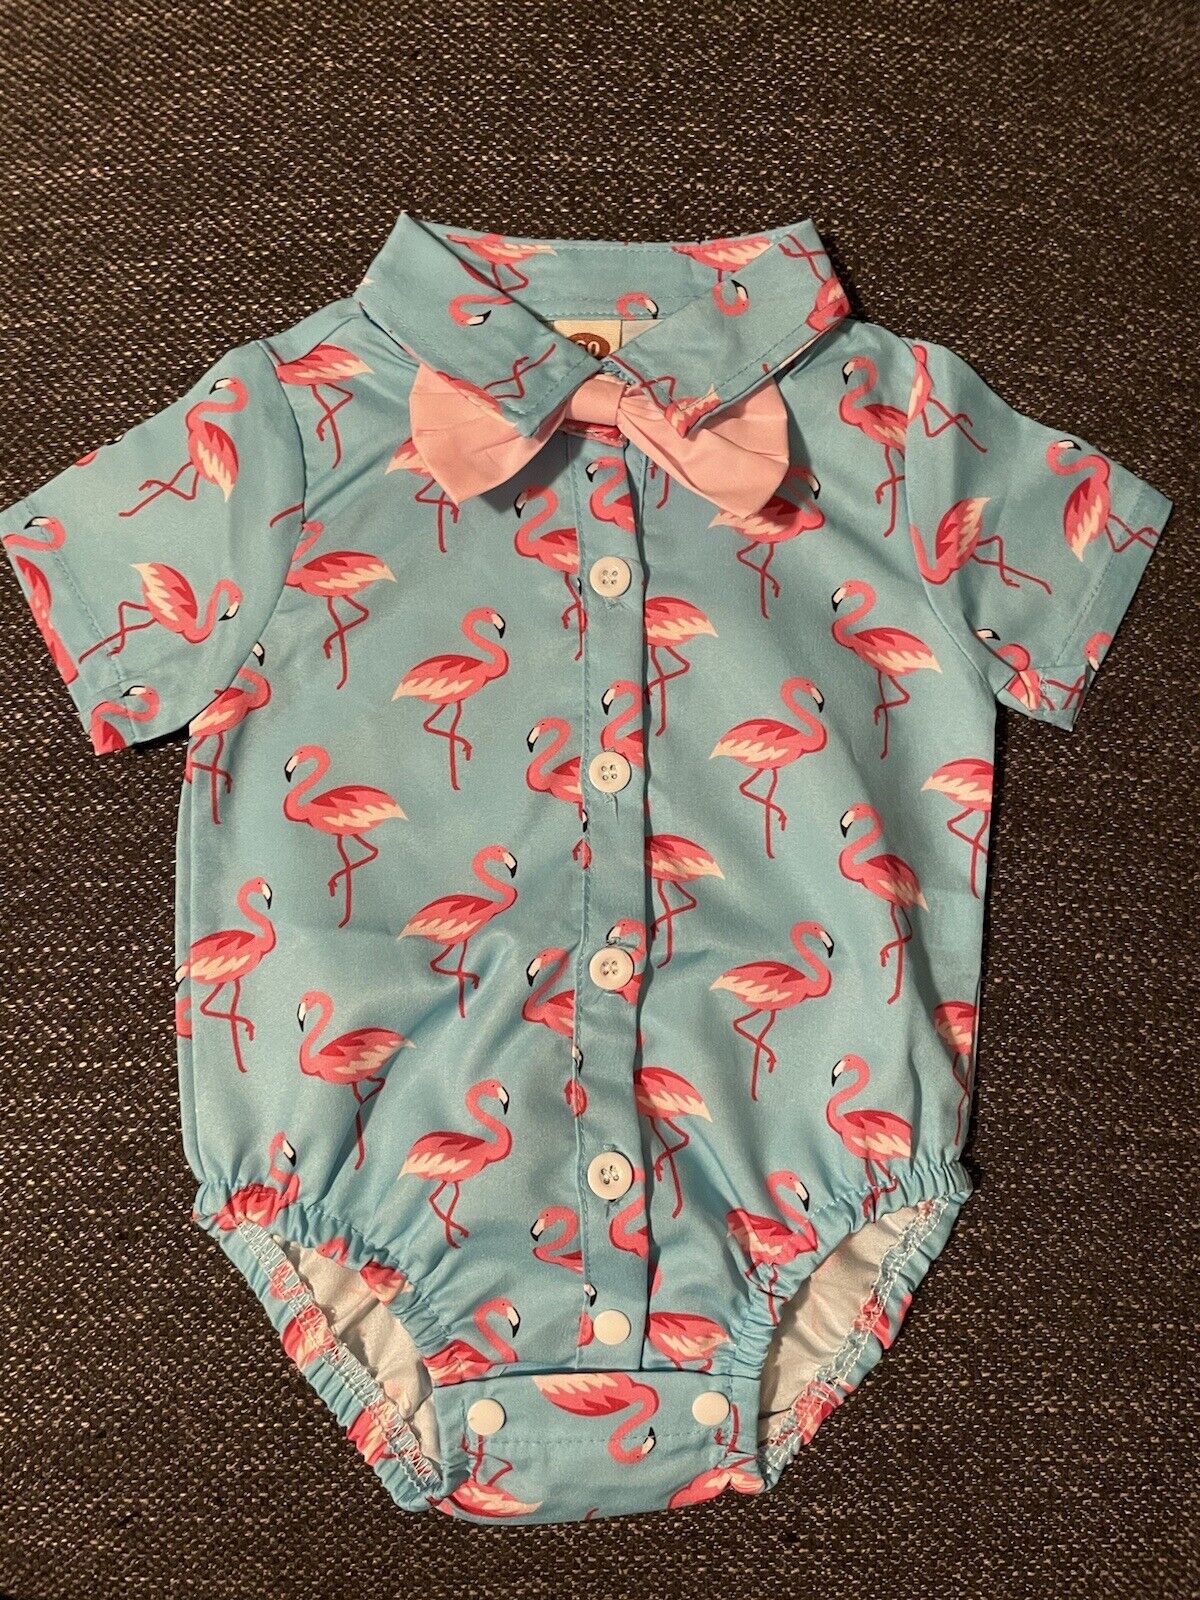 BNWT Baby Romper Bodysuit Size 00-0 3-9 Months Flamingo Bow Tie Collared